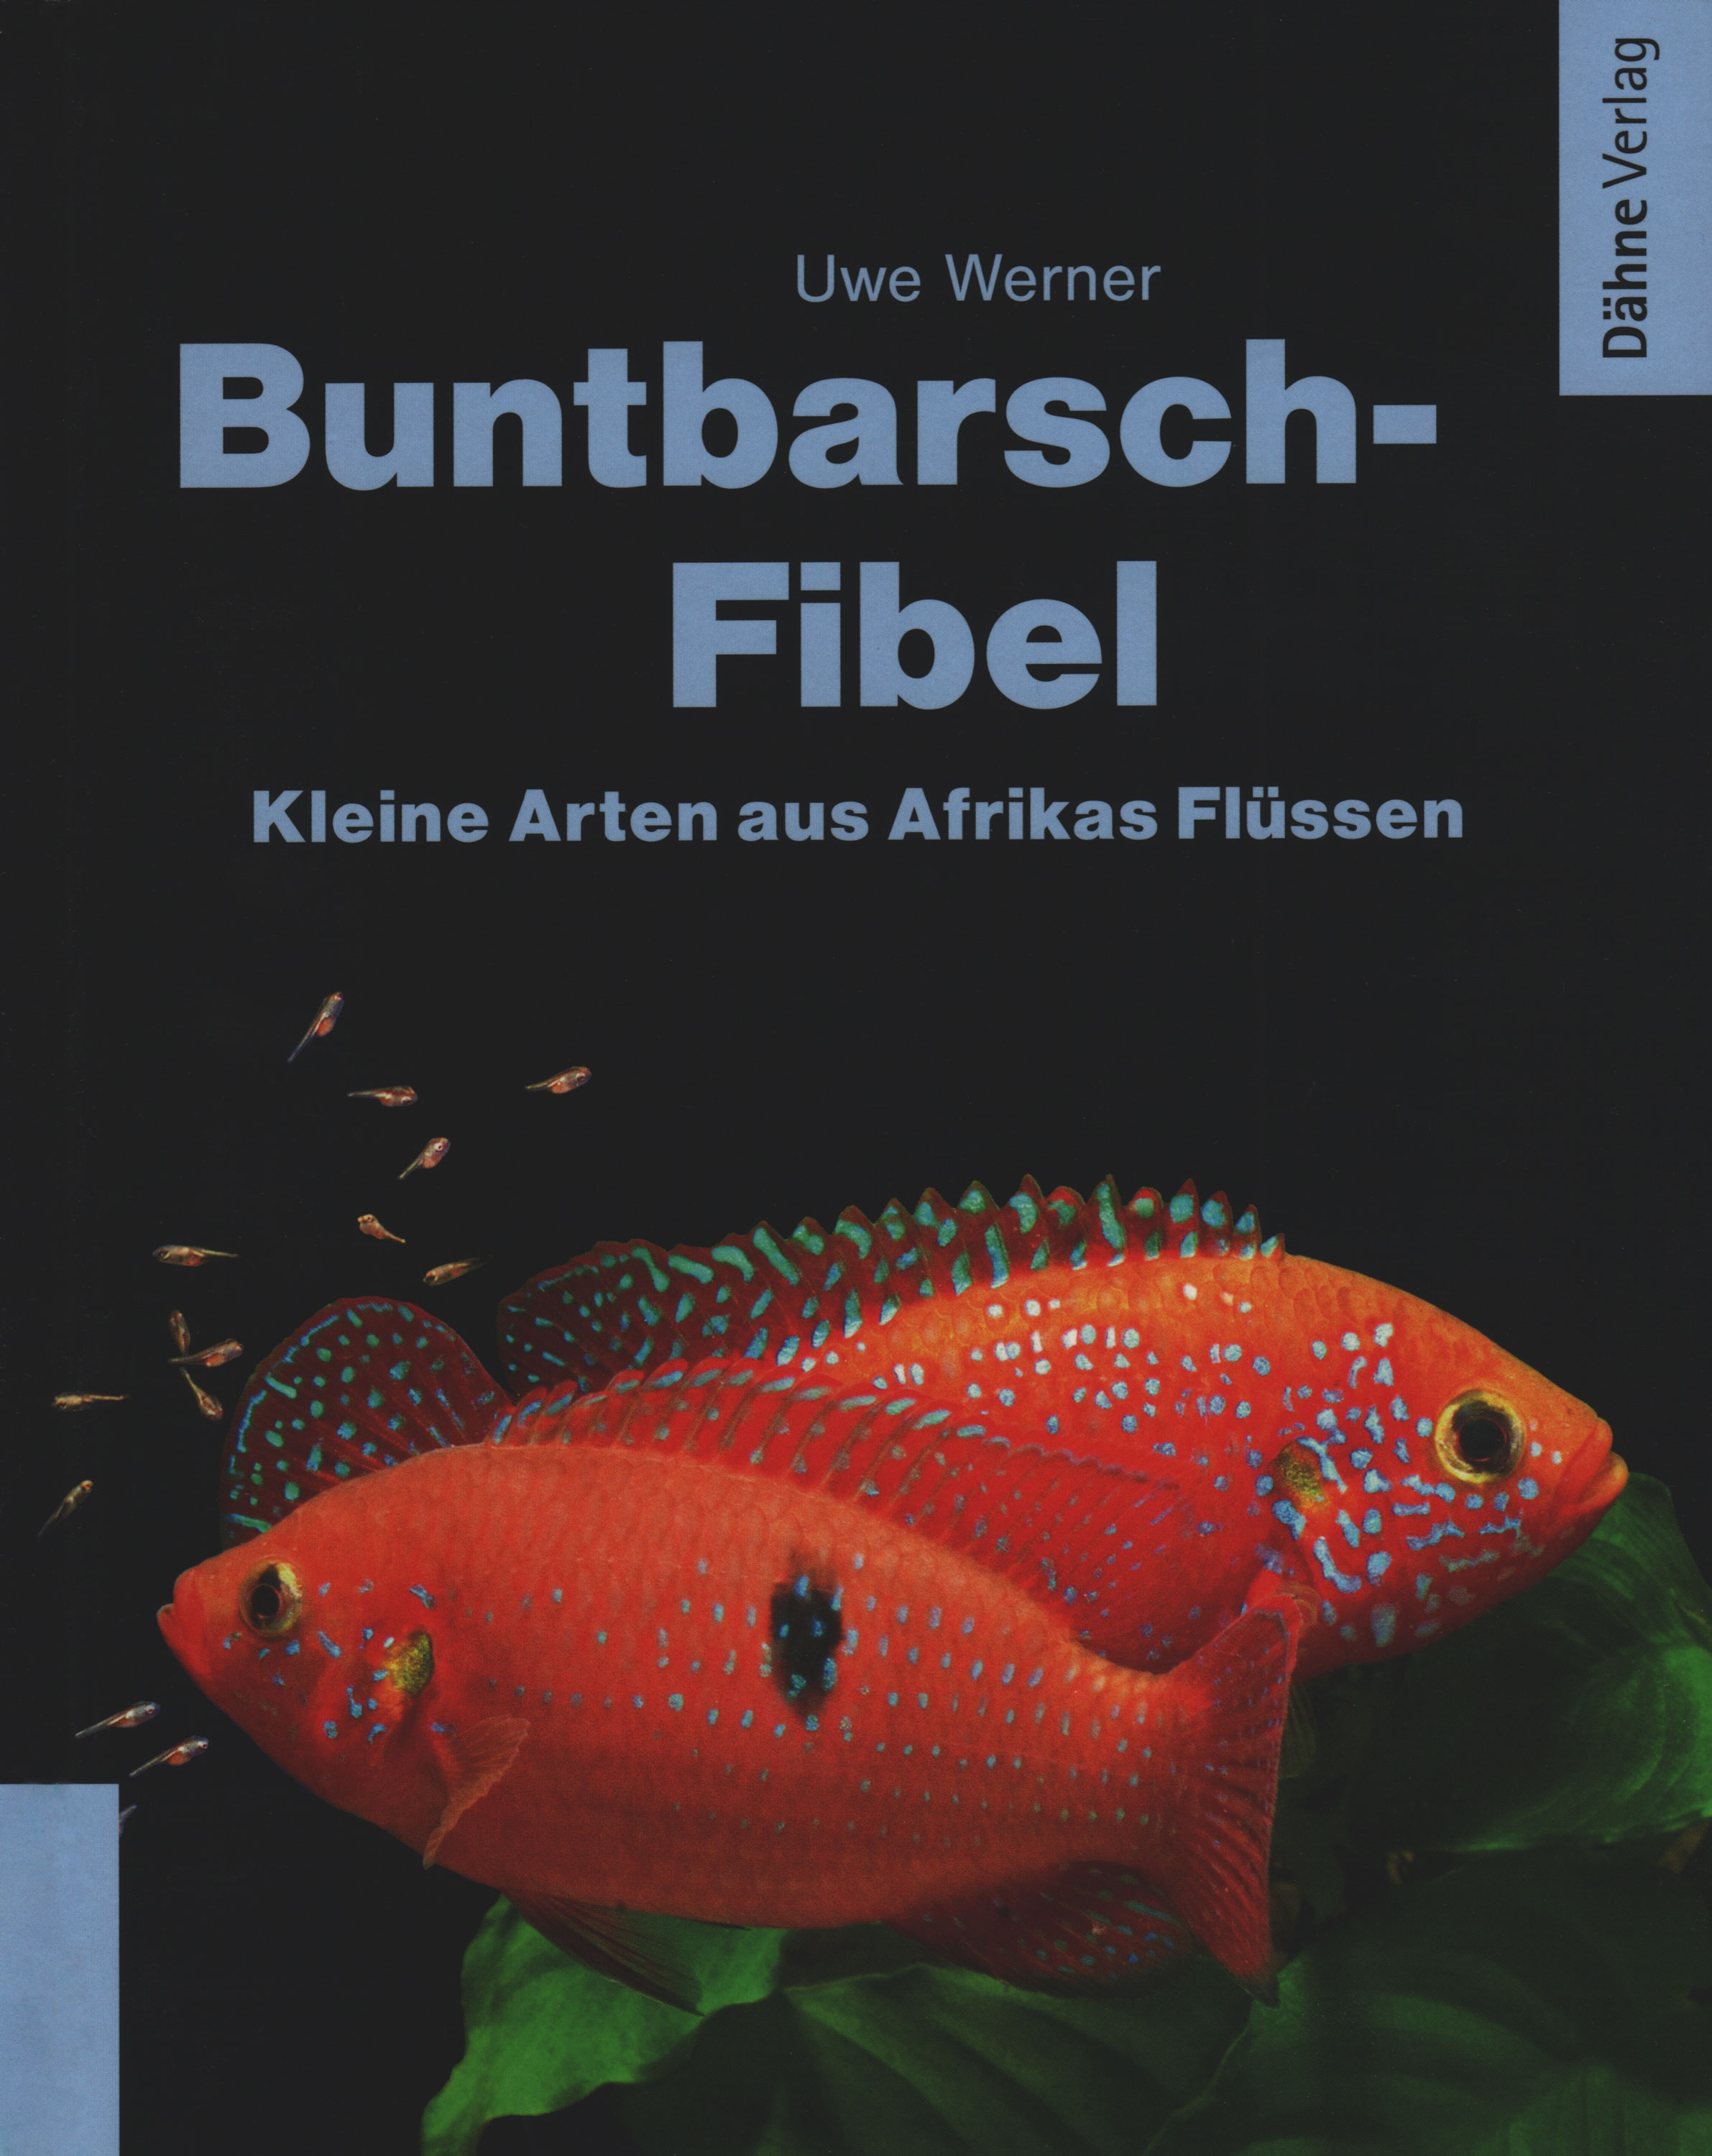 Buntbarsch-Fibel Afrika / Uwe Werner